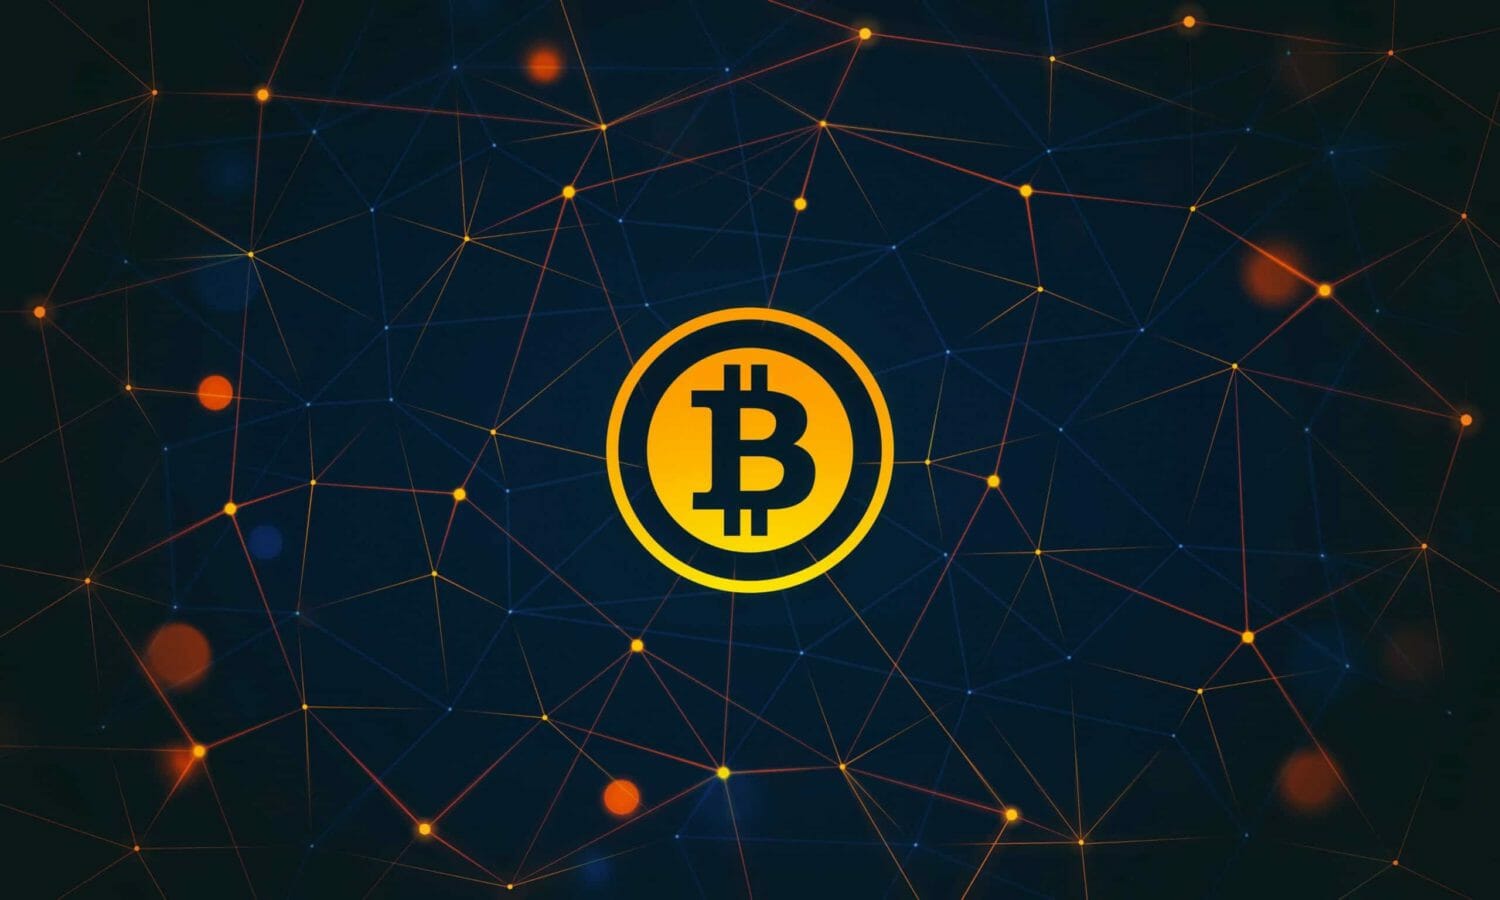 The Bitcoin Web !